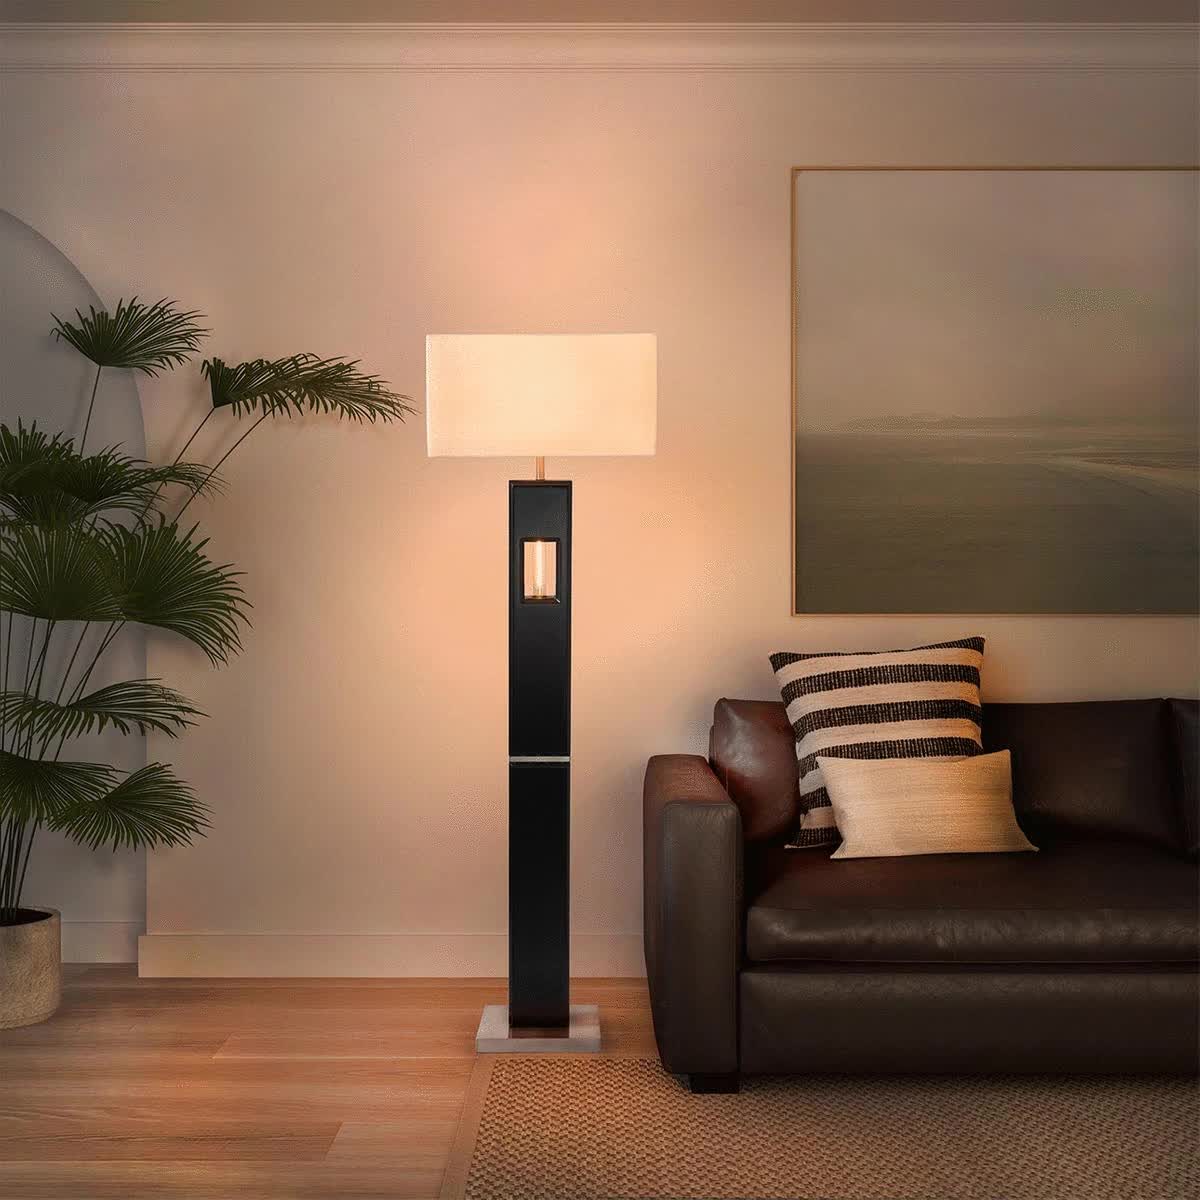 Deus Ex Machina Floor Lamp with Nightlight feature - 60", Espresso finish, 4-Way Rotary Switch, Edison LED bulb